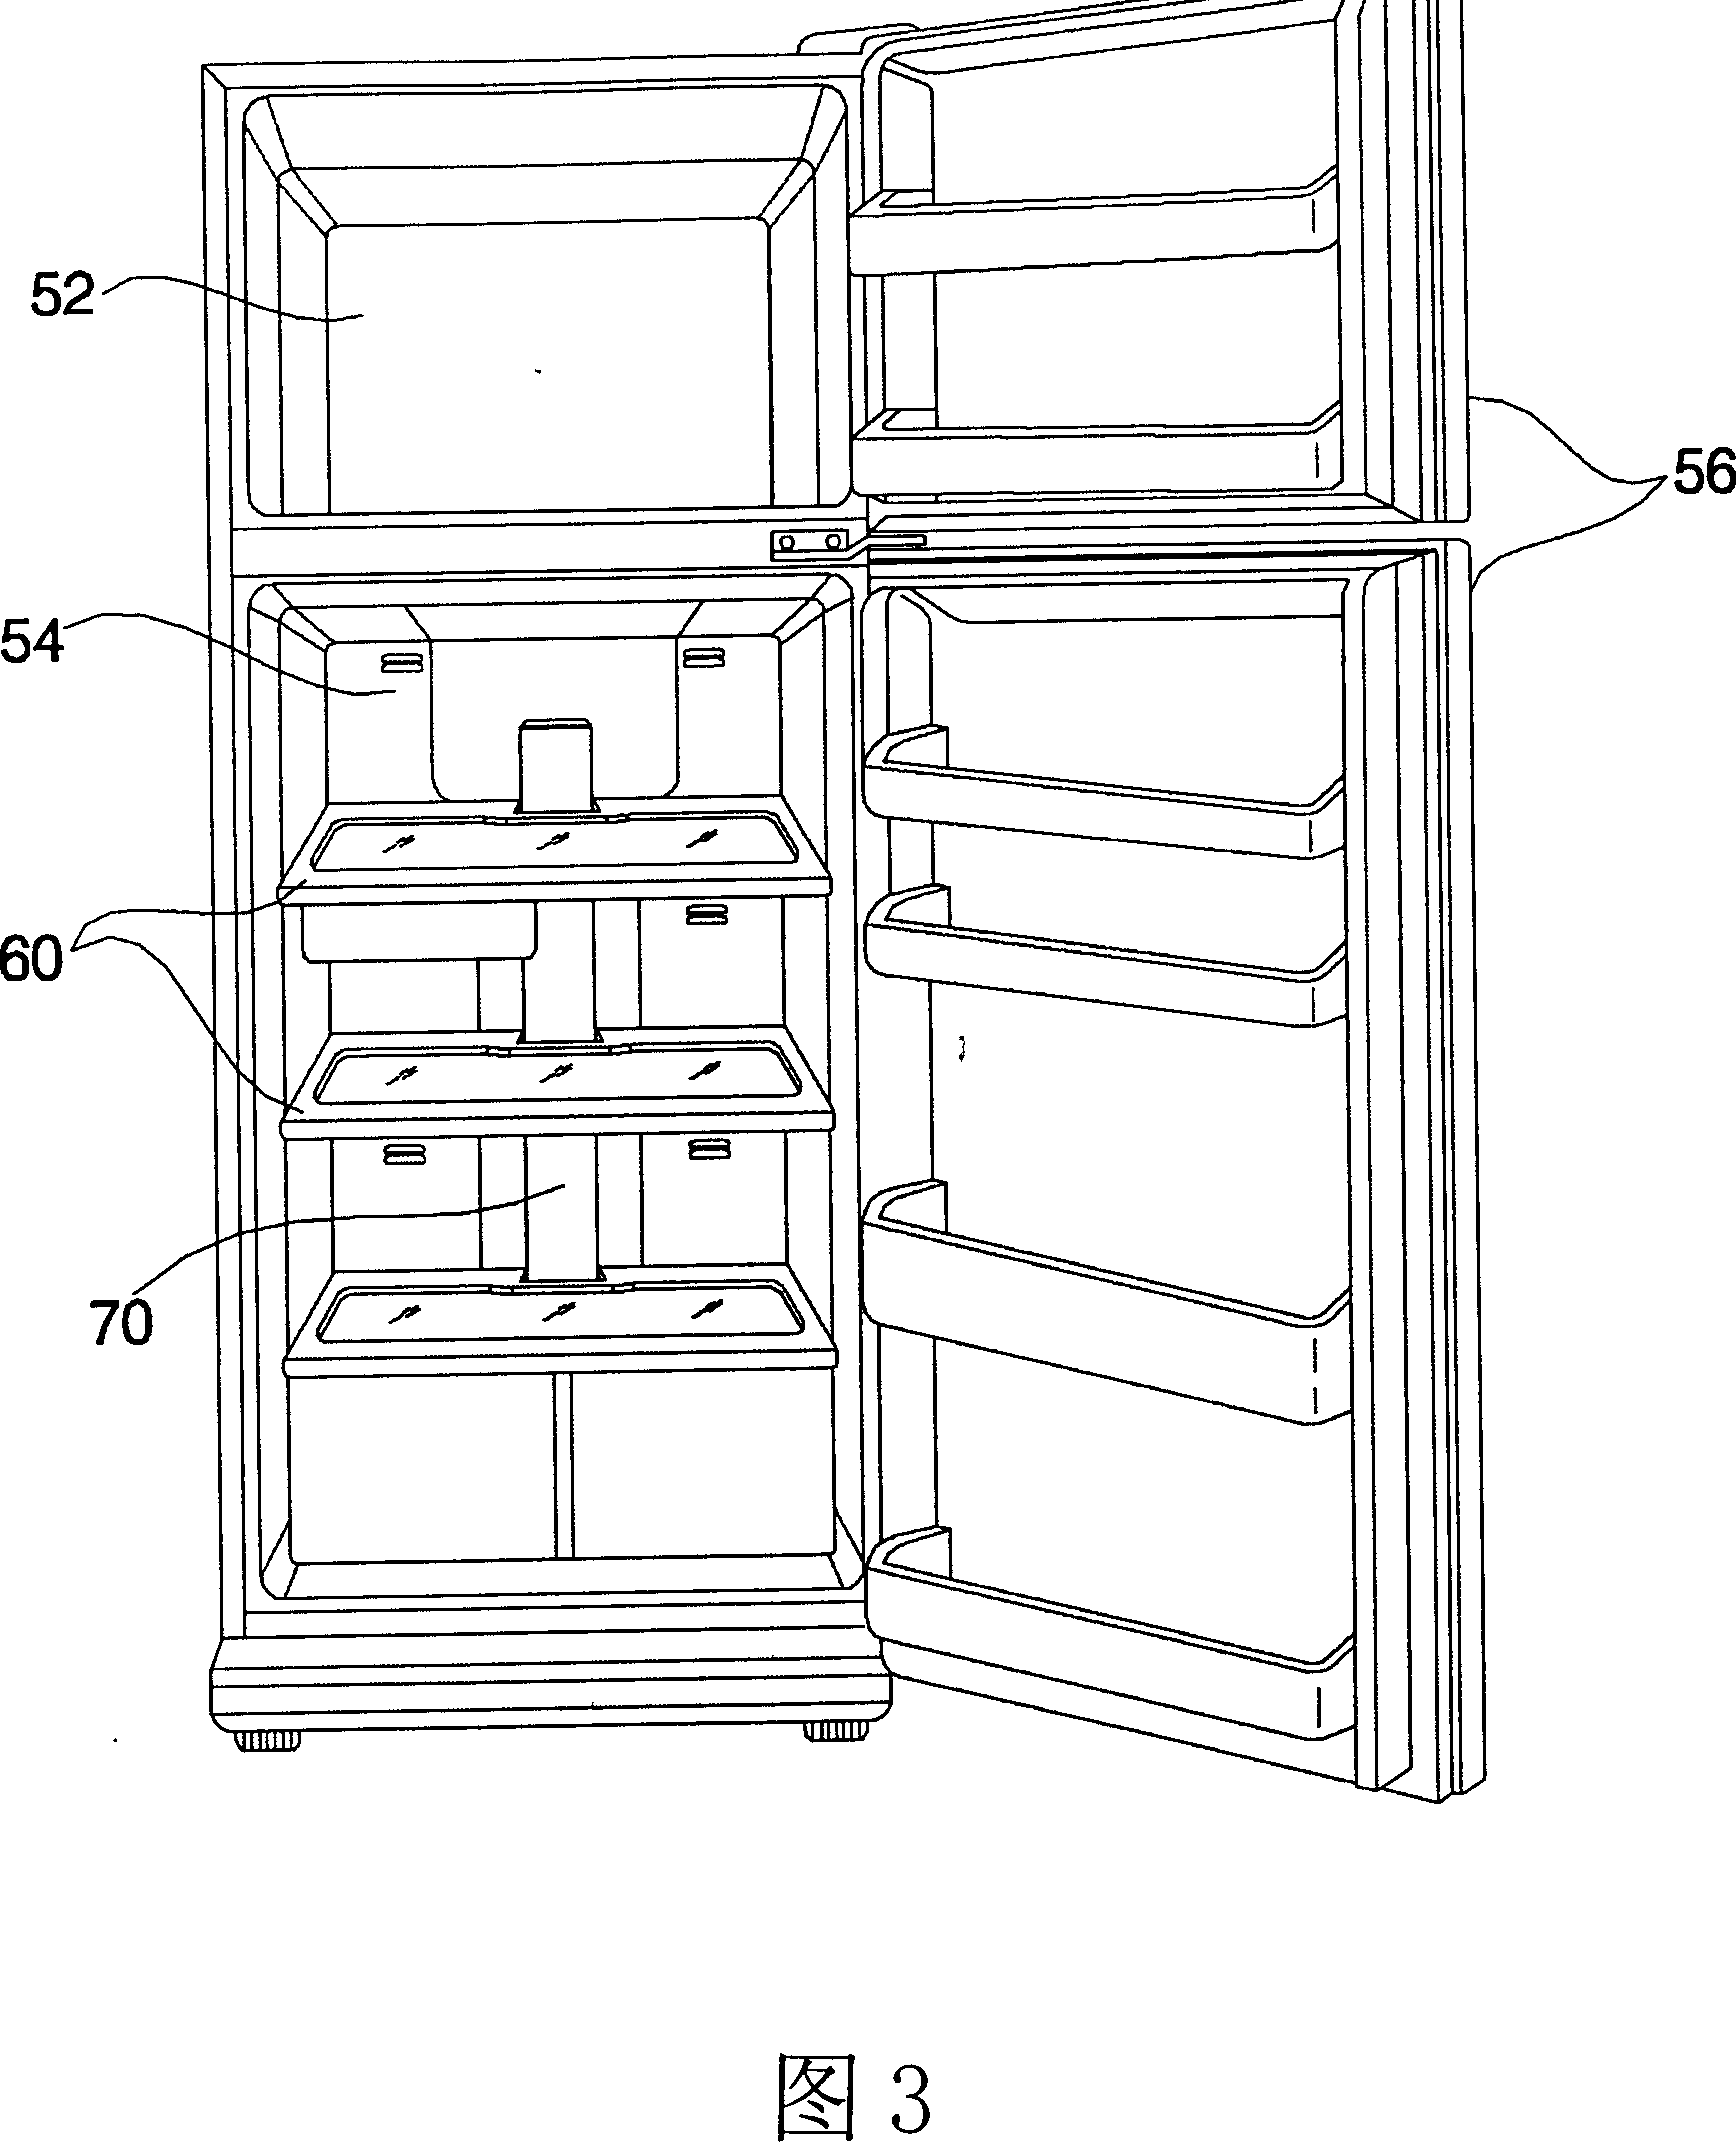 Level controller for shelf board of refrigerator